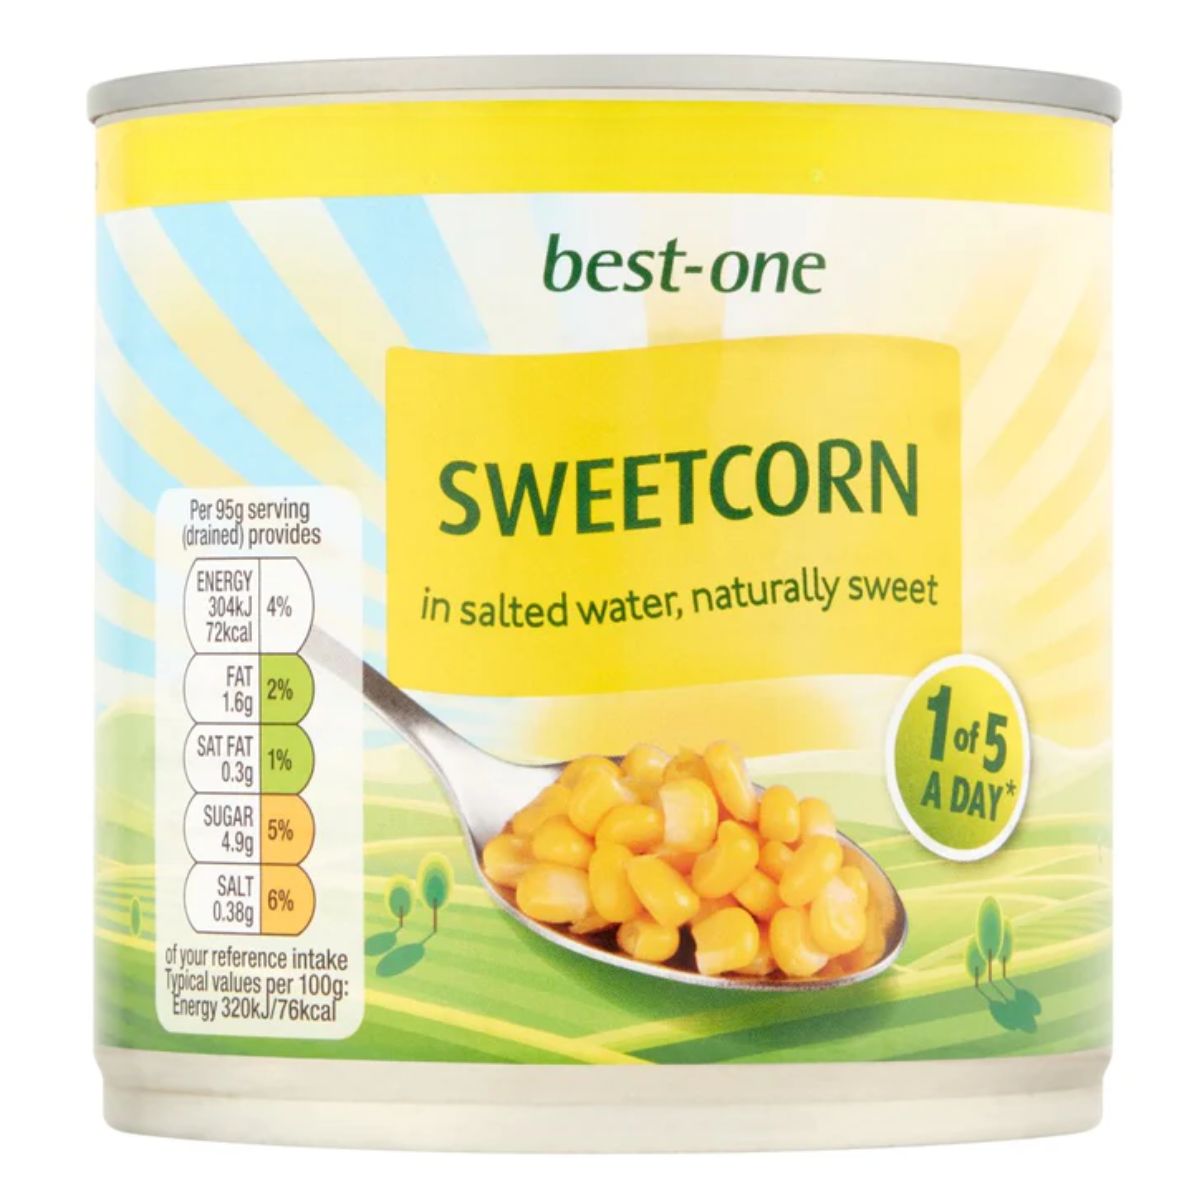 Best One - Sweetcorn - 340g sweetcorn in a tin.